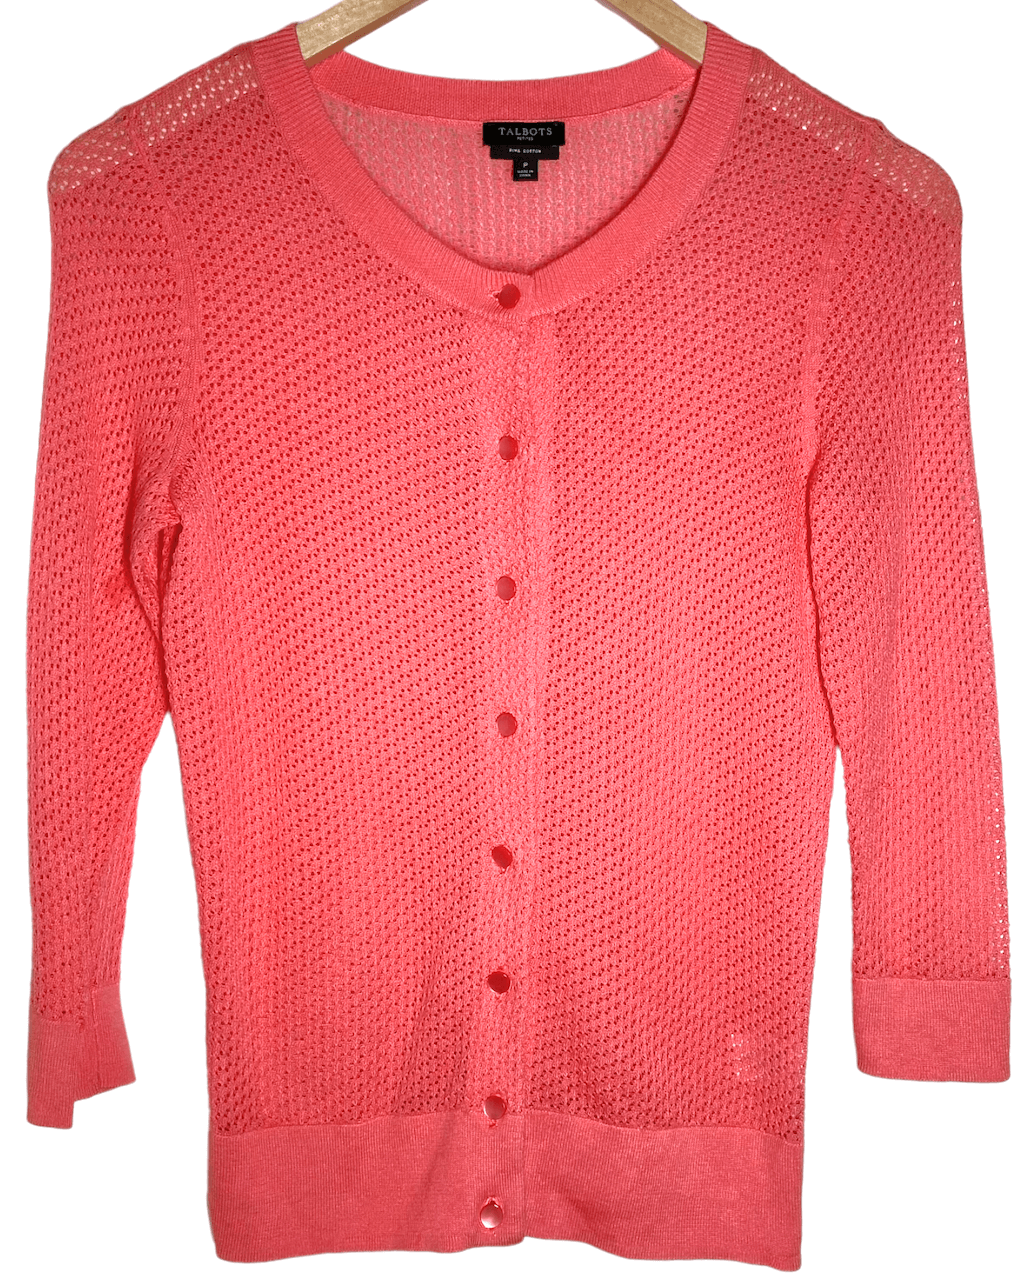 Light Spring TALBOTS orange pointelle knit sweater cardigan